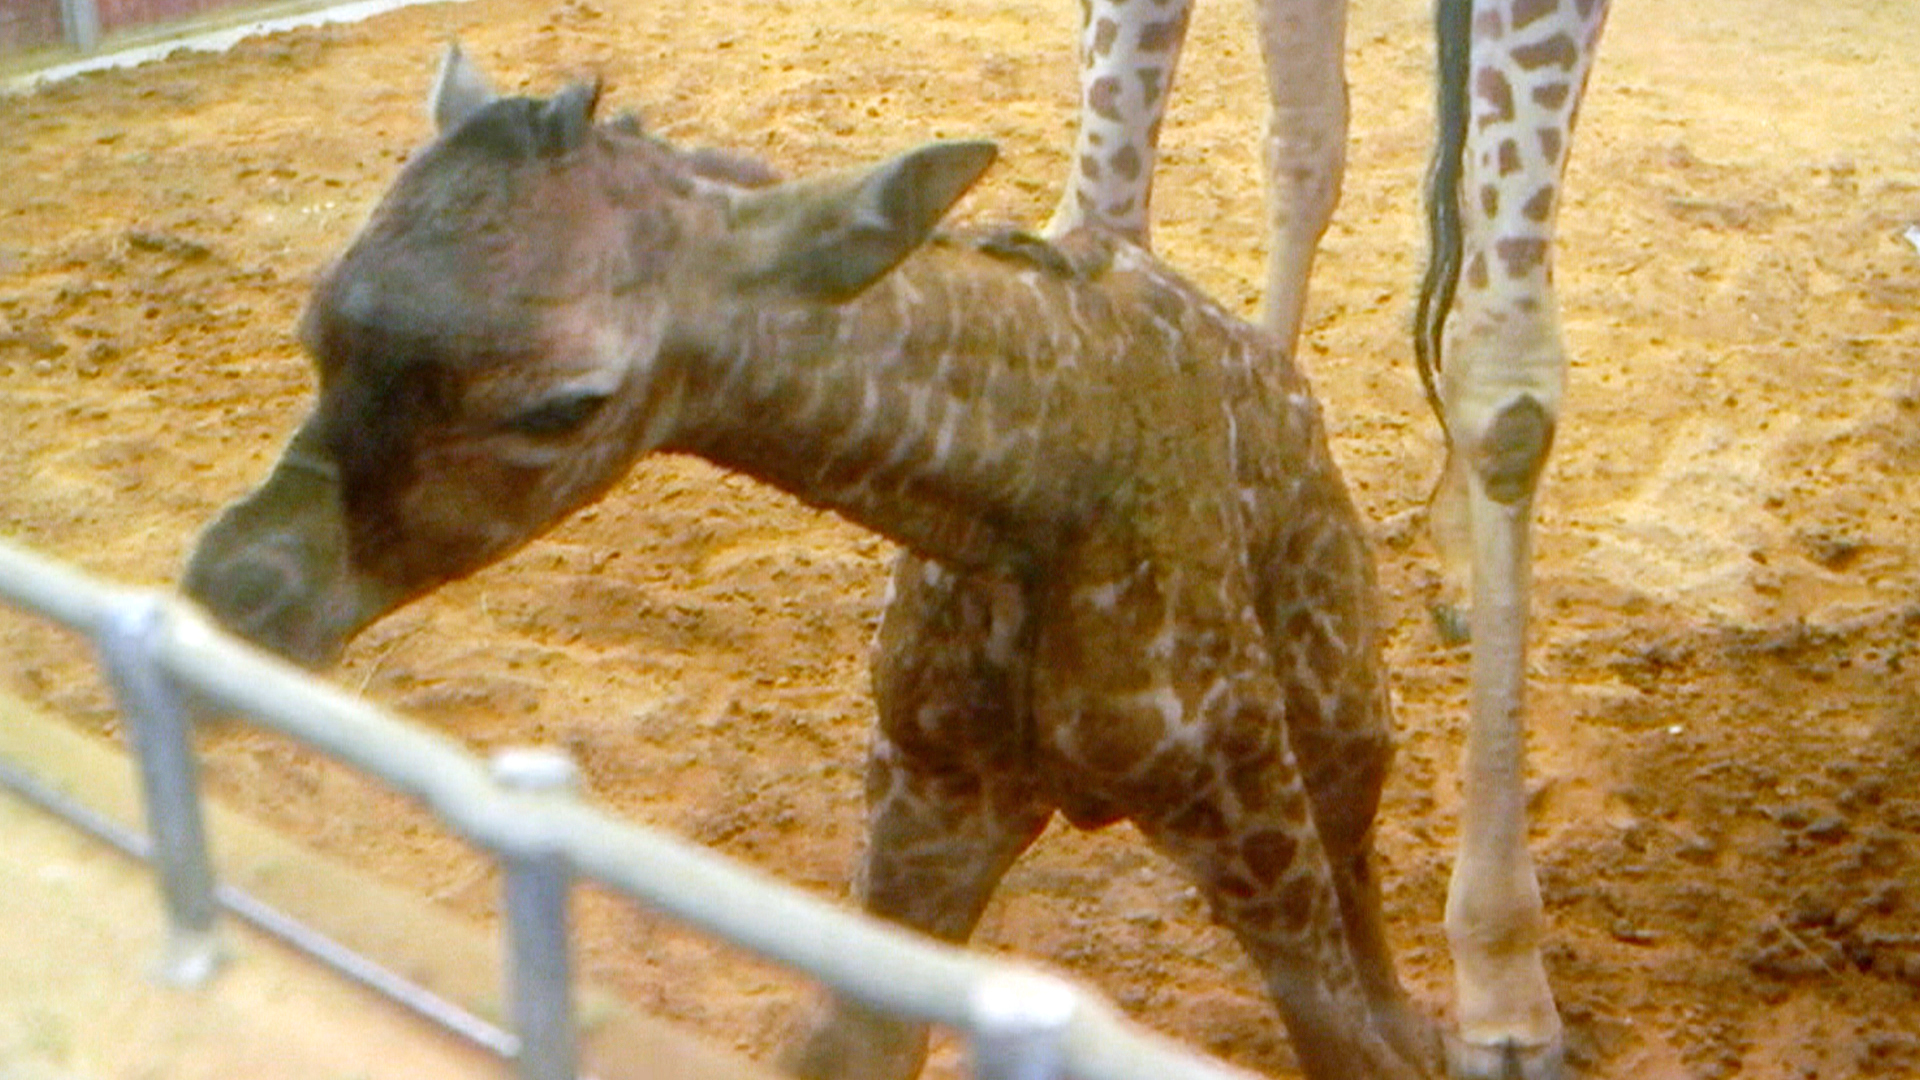 Animal Planet live streams birth of baby giraffe